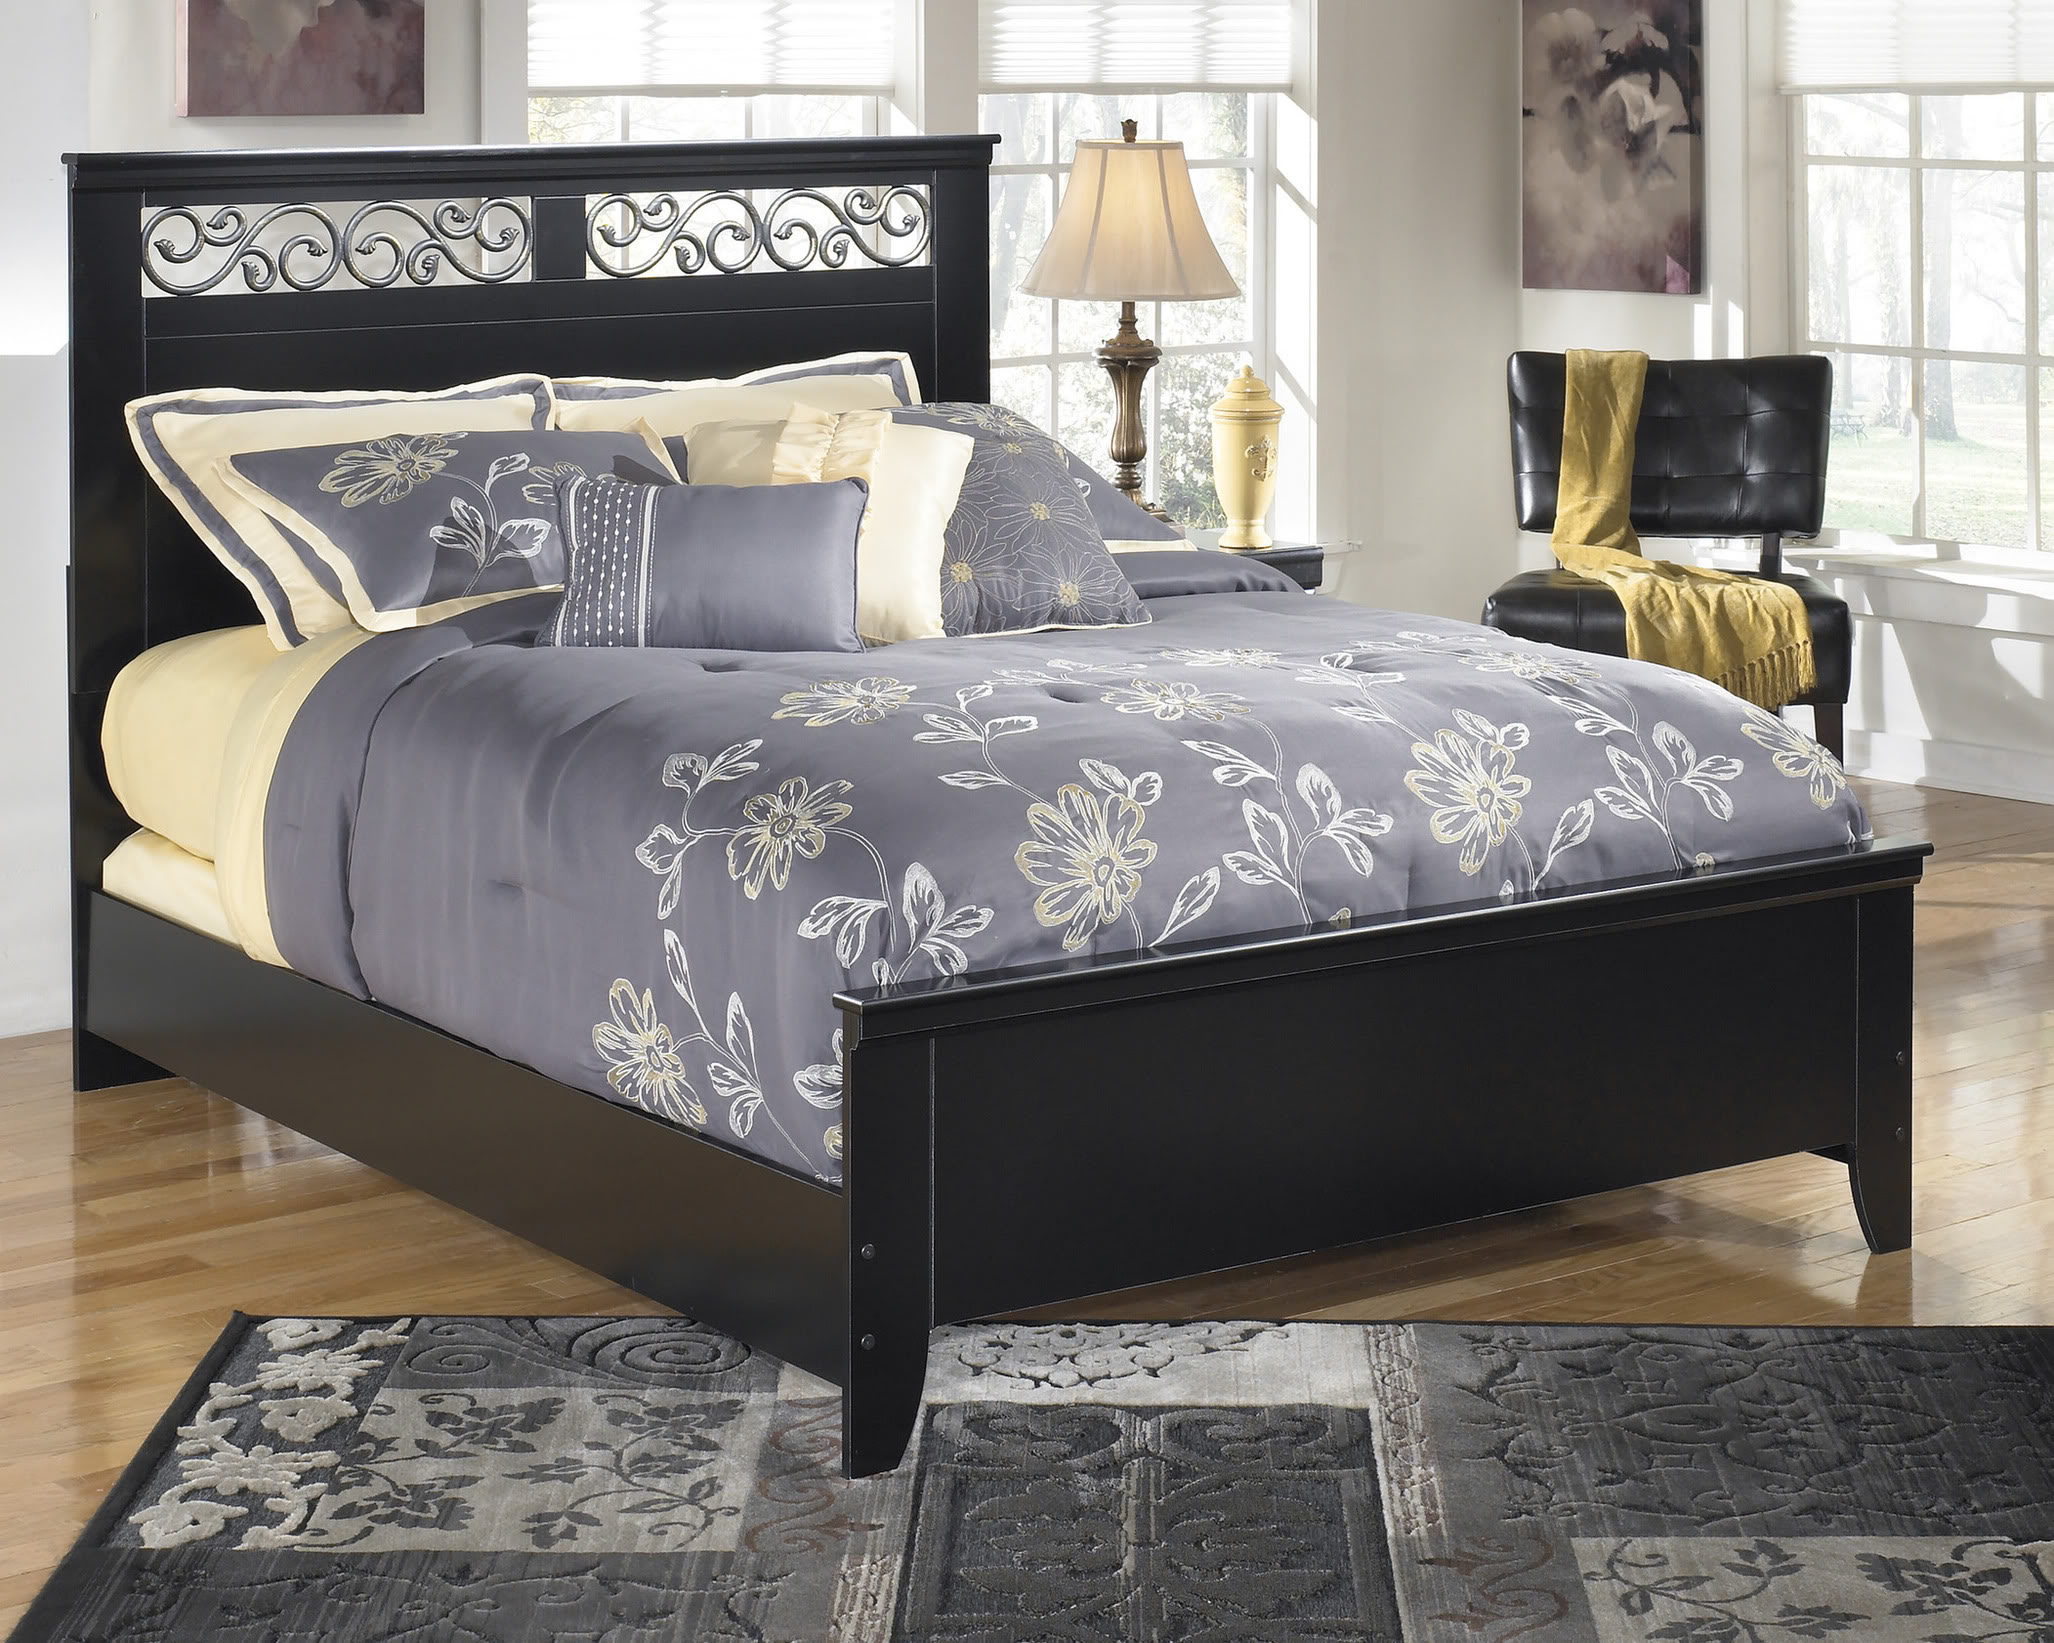 ornate bedroom furniture cheap